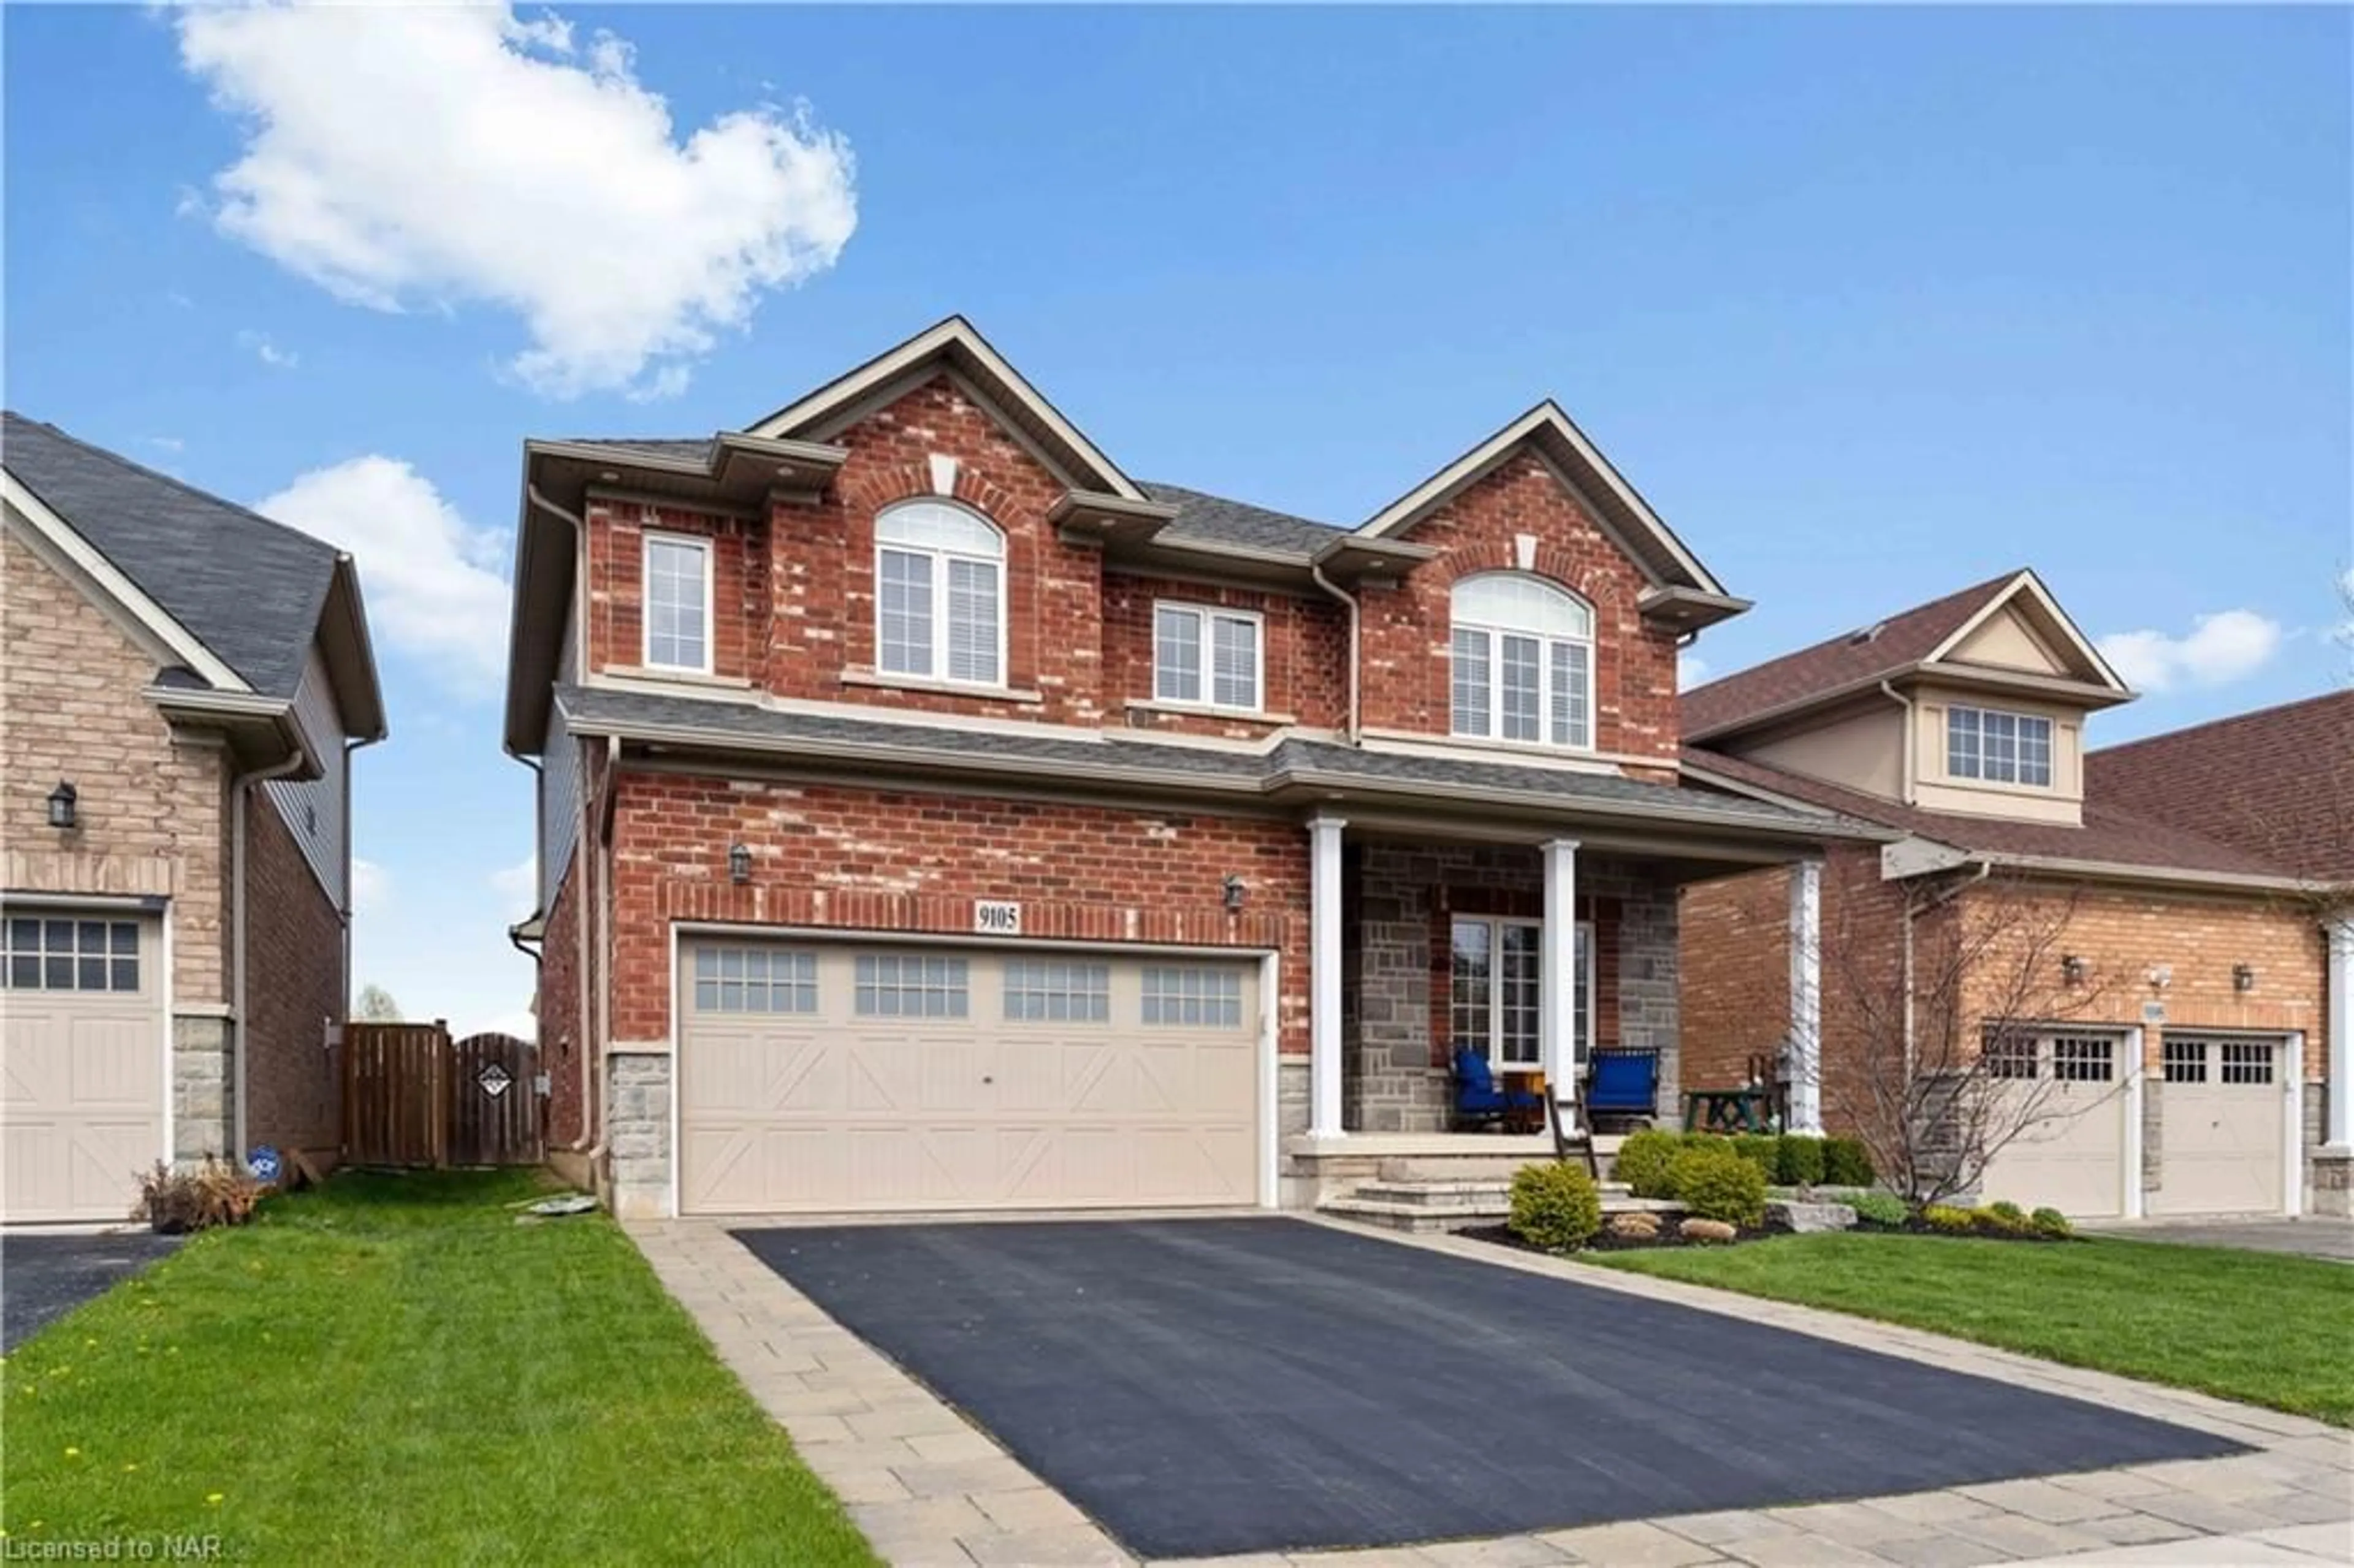 Home with brick exterior material for 9105 White Oak Ave, Niagara Falls Ontario L2G 0E9